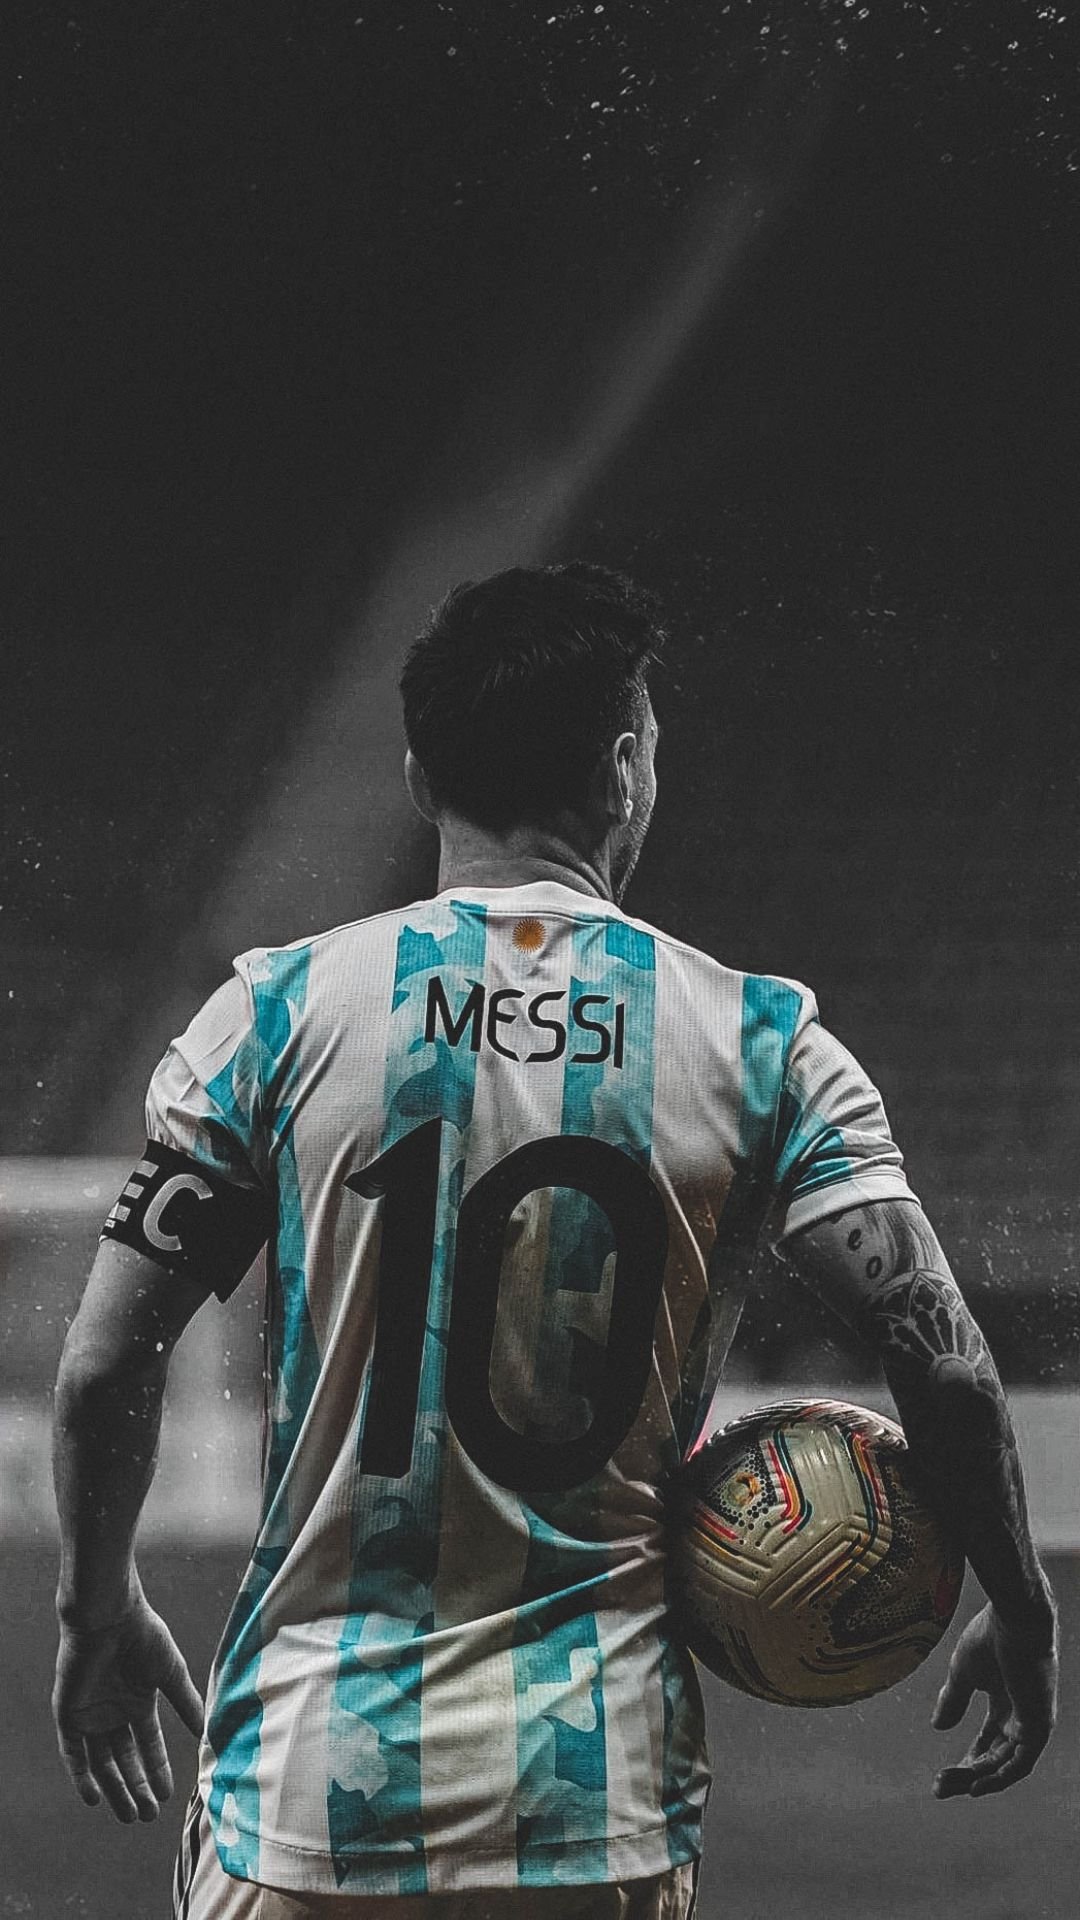 Messi argentina football player